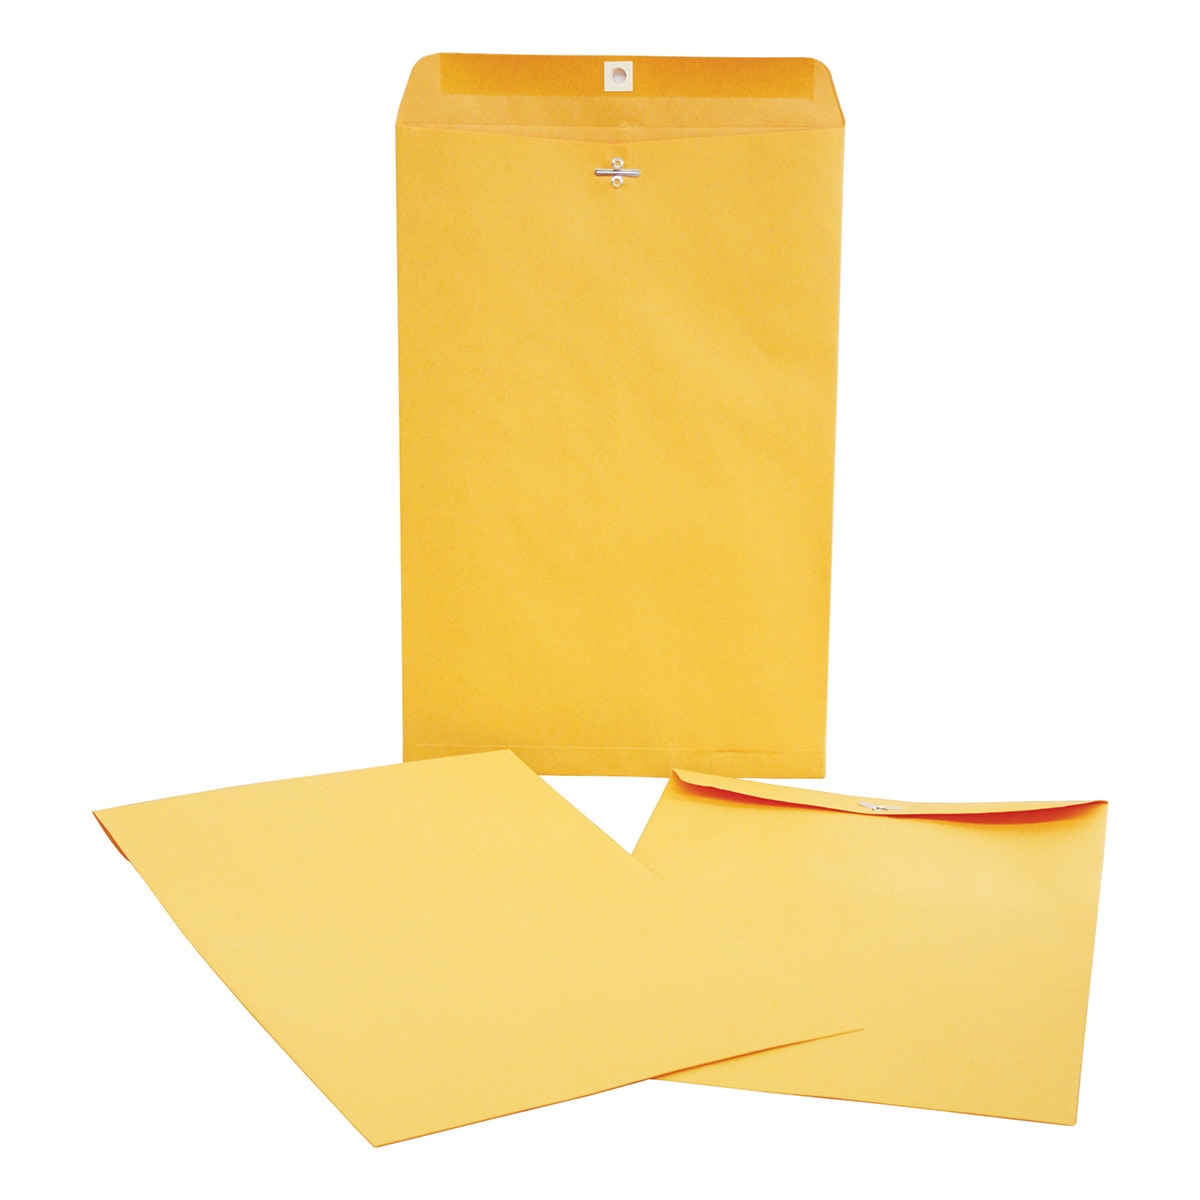 Ampad sobre tipo bolsa con broche tamaño oficio amarillo